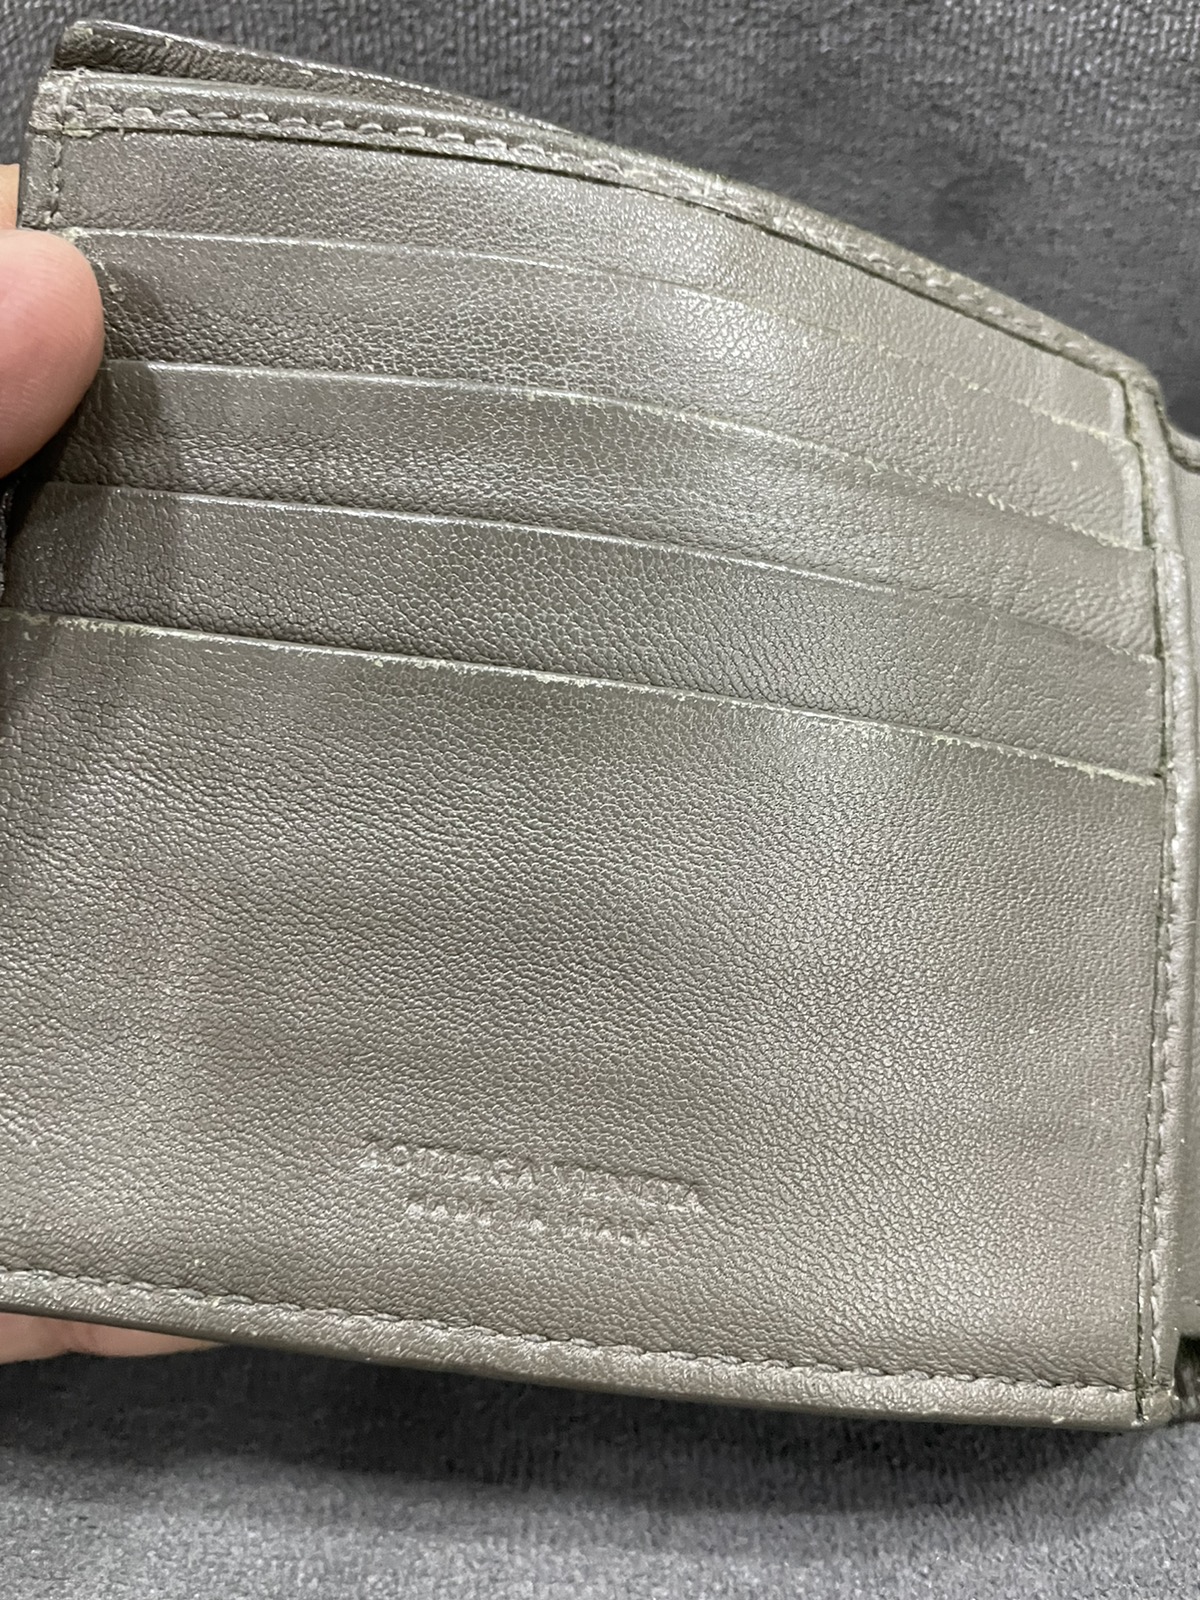 Authentic BOTTEGA VENETA MEN’S Green Leather Wallet - 5